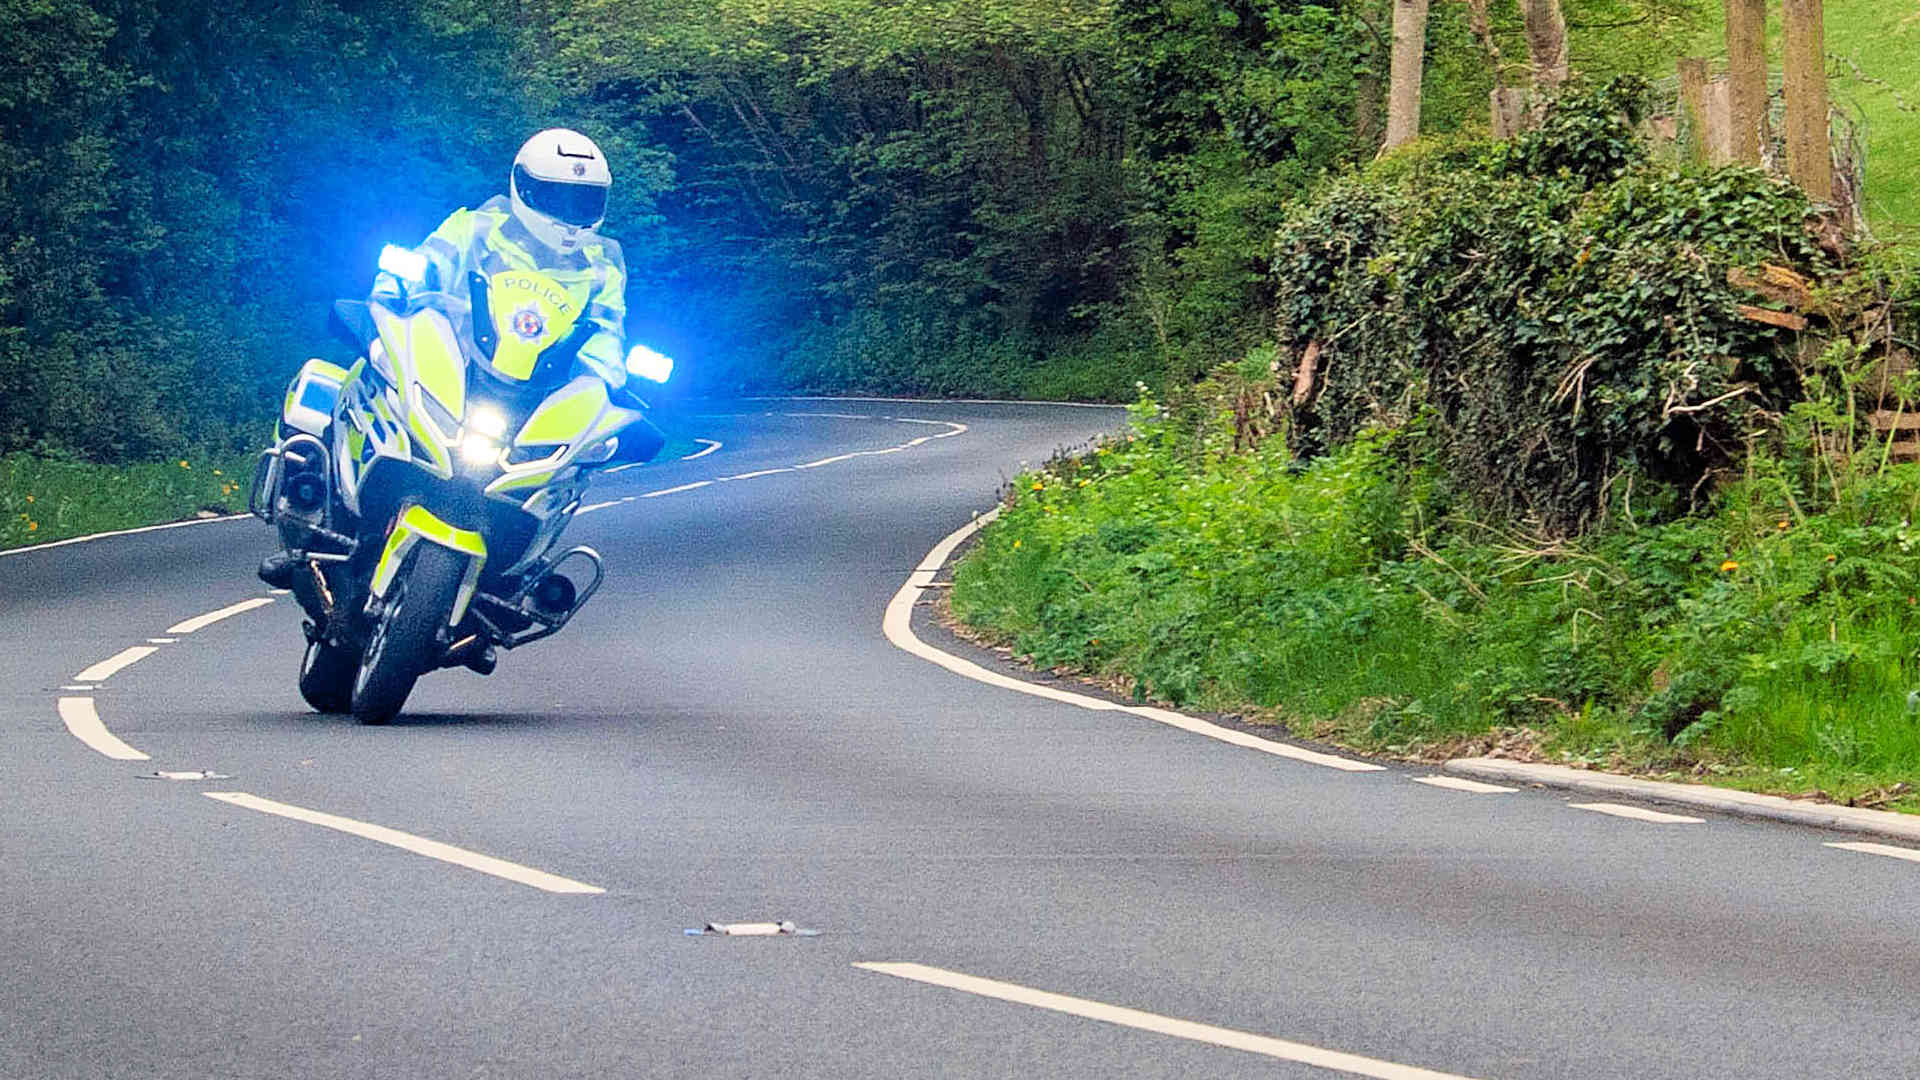 Northumbria BikeSafe advanced police motorcyclist cornering